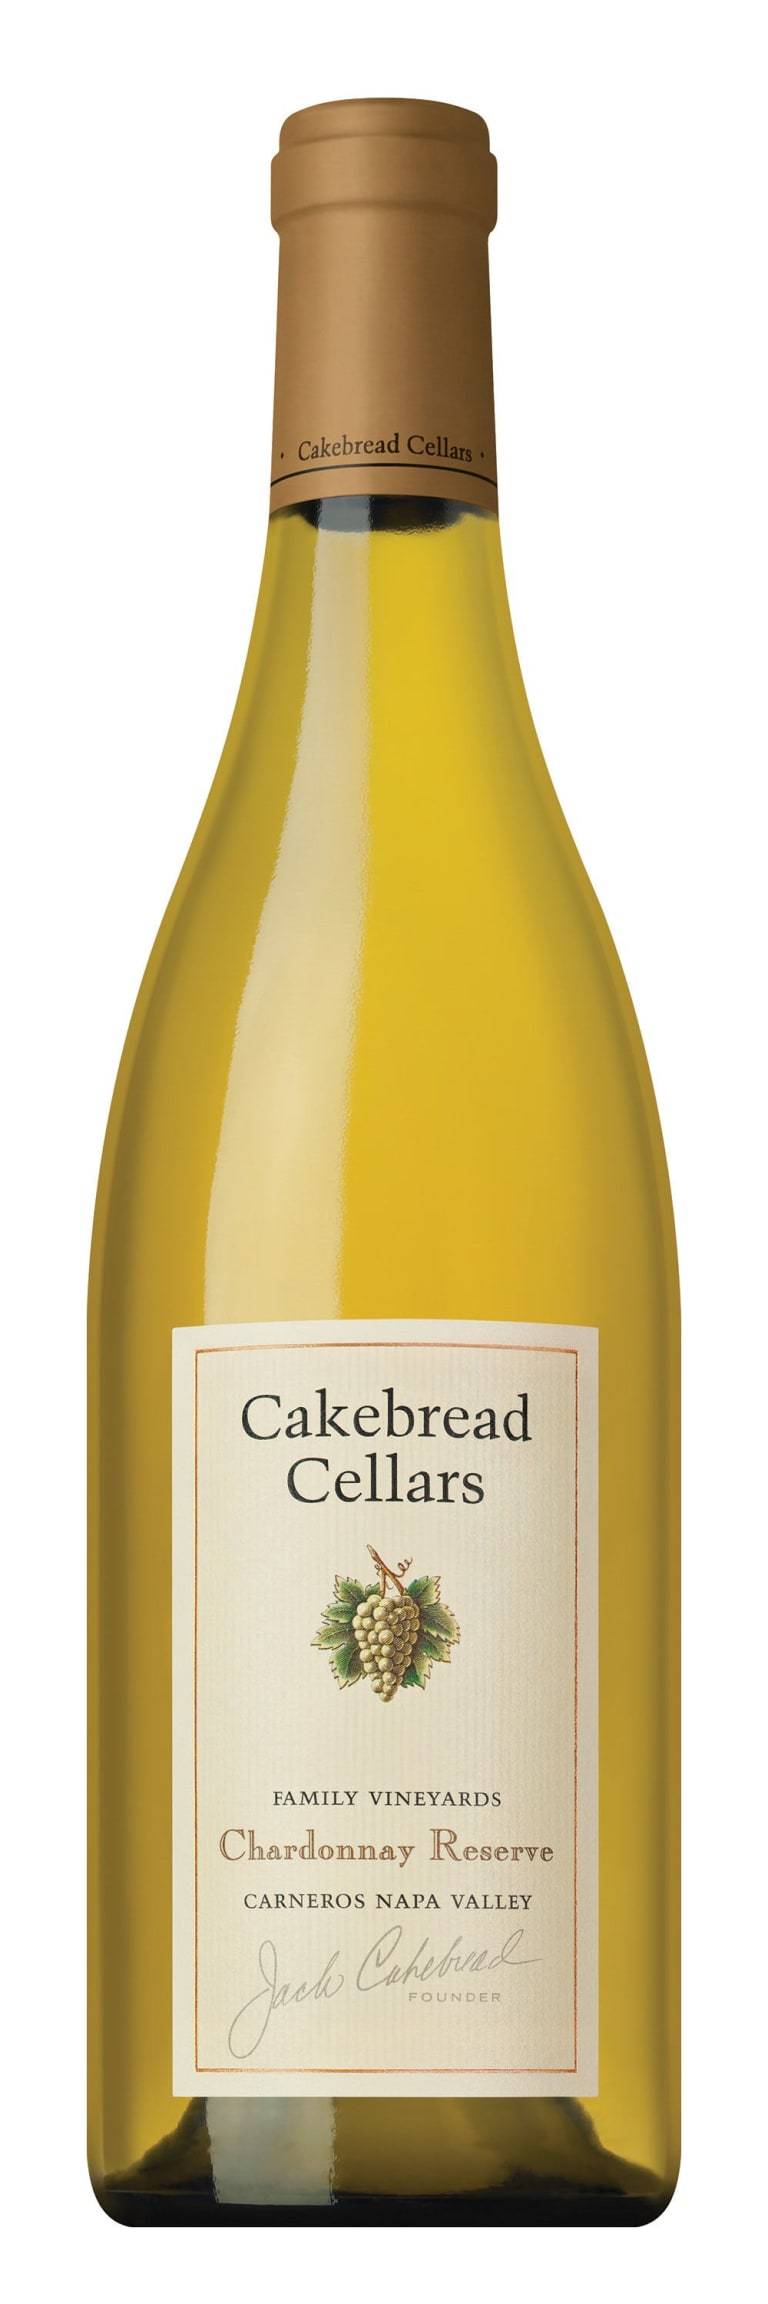 Cakebread Cellars Chardonnay Reserve 2016